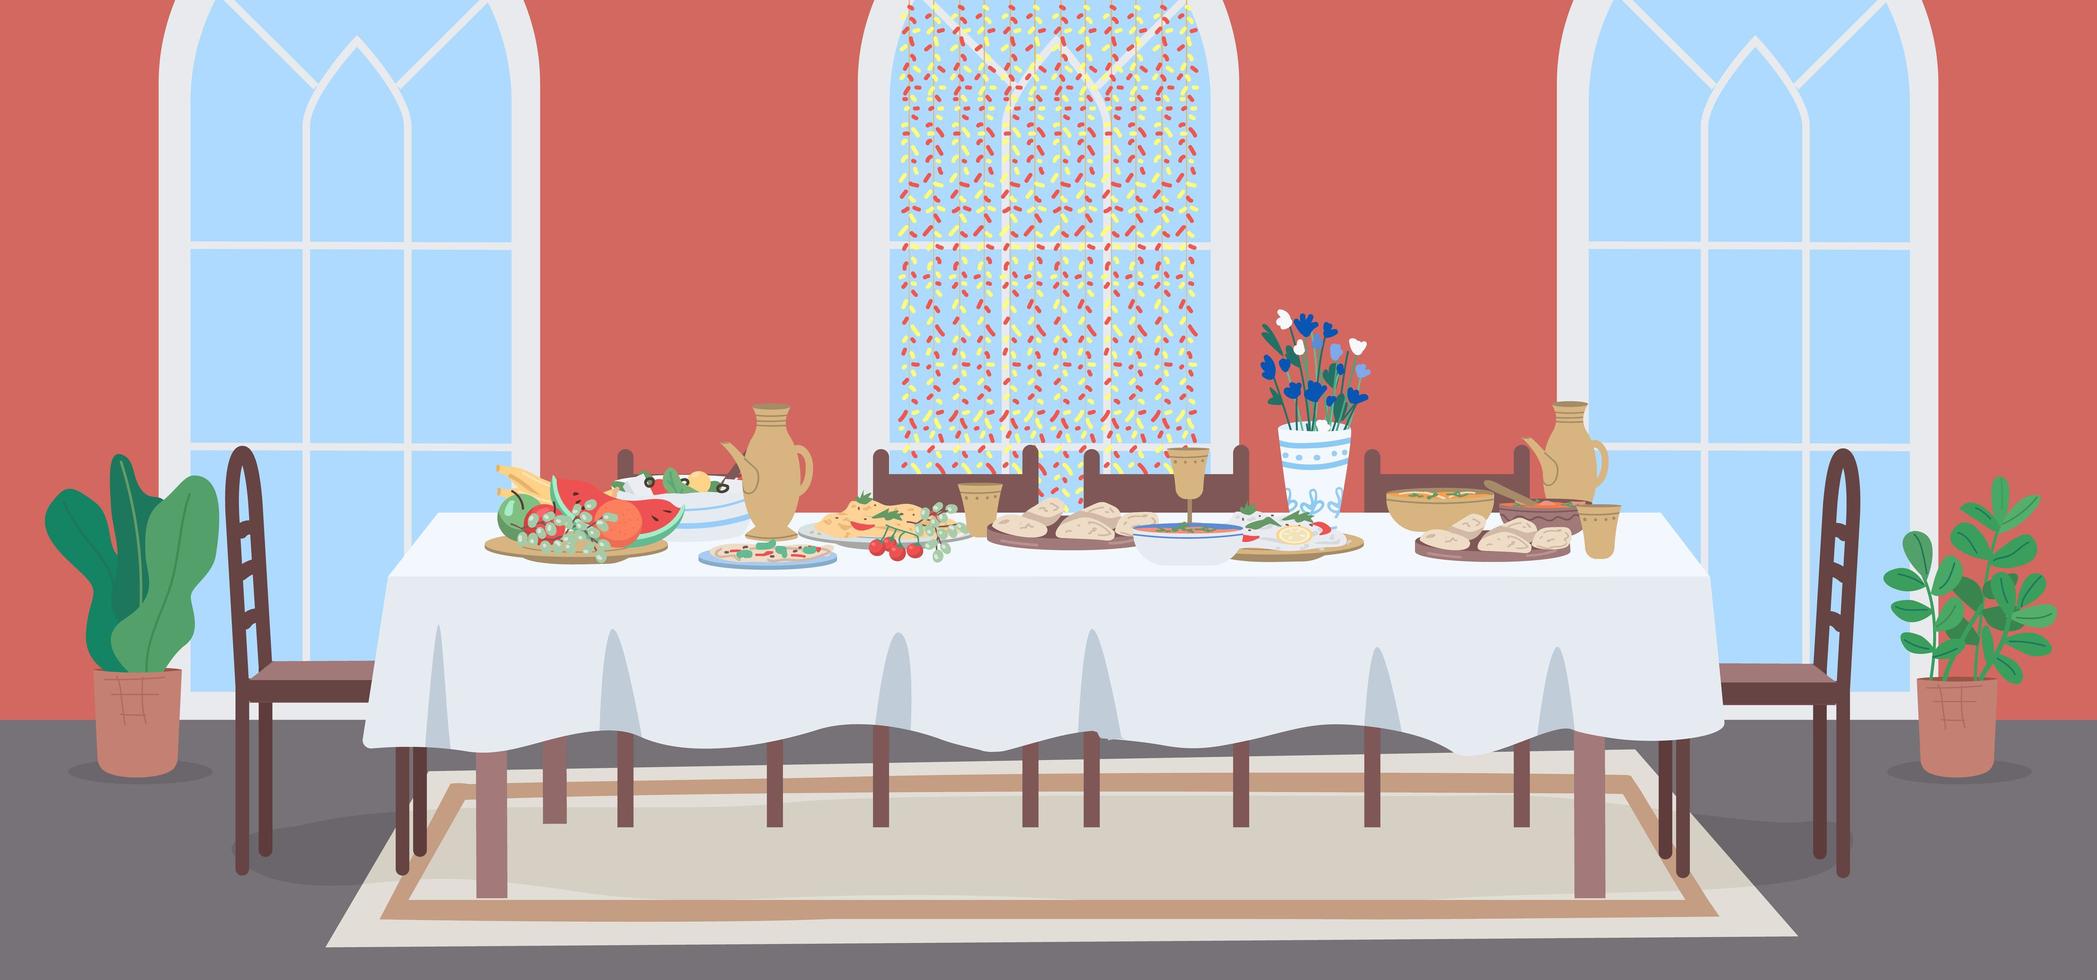 National muslim meal flat color vector illustration